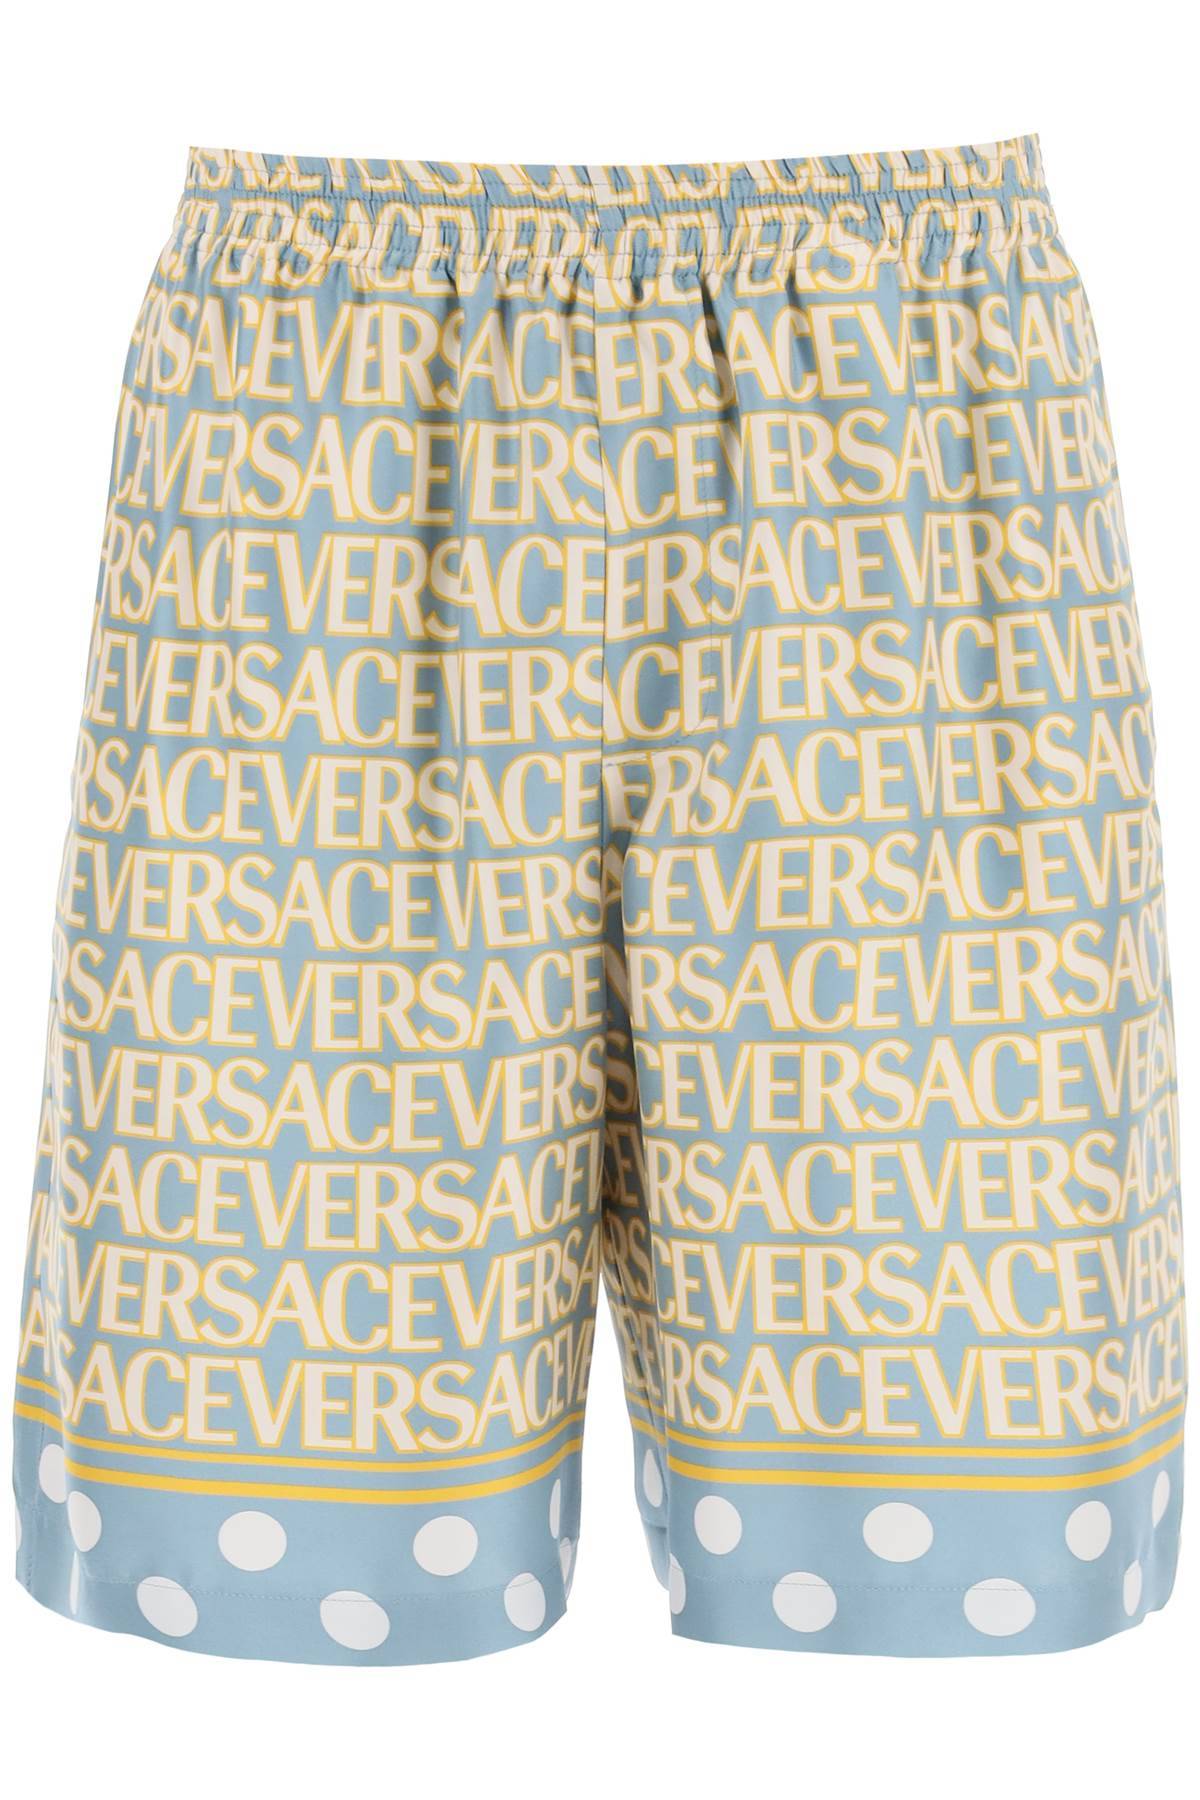 Versace VERSACE versace allover silk shorts